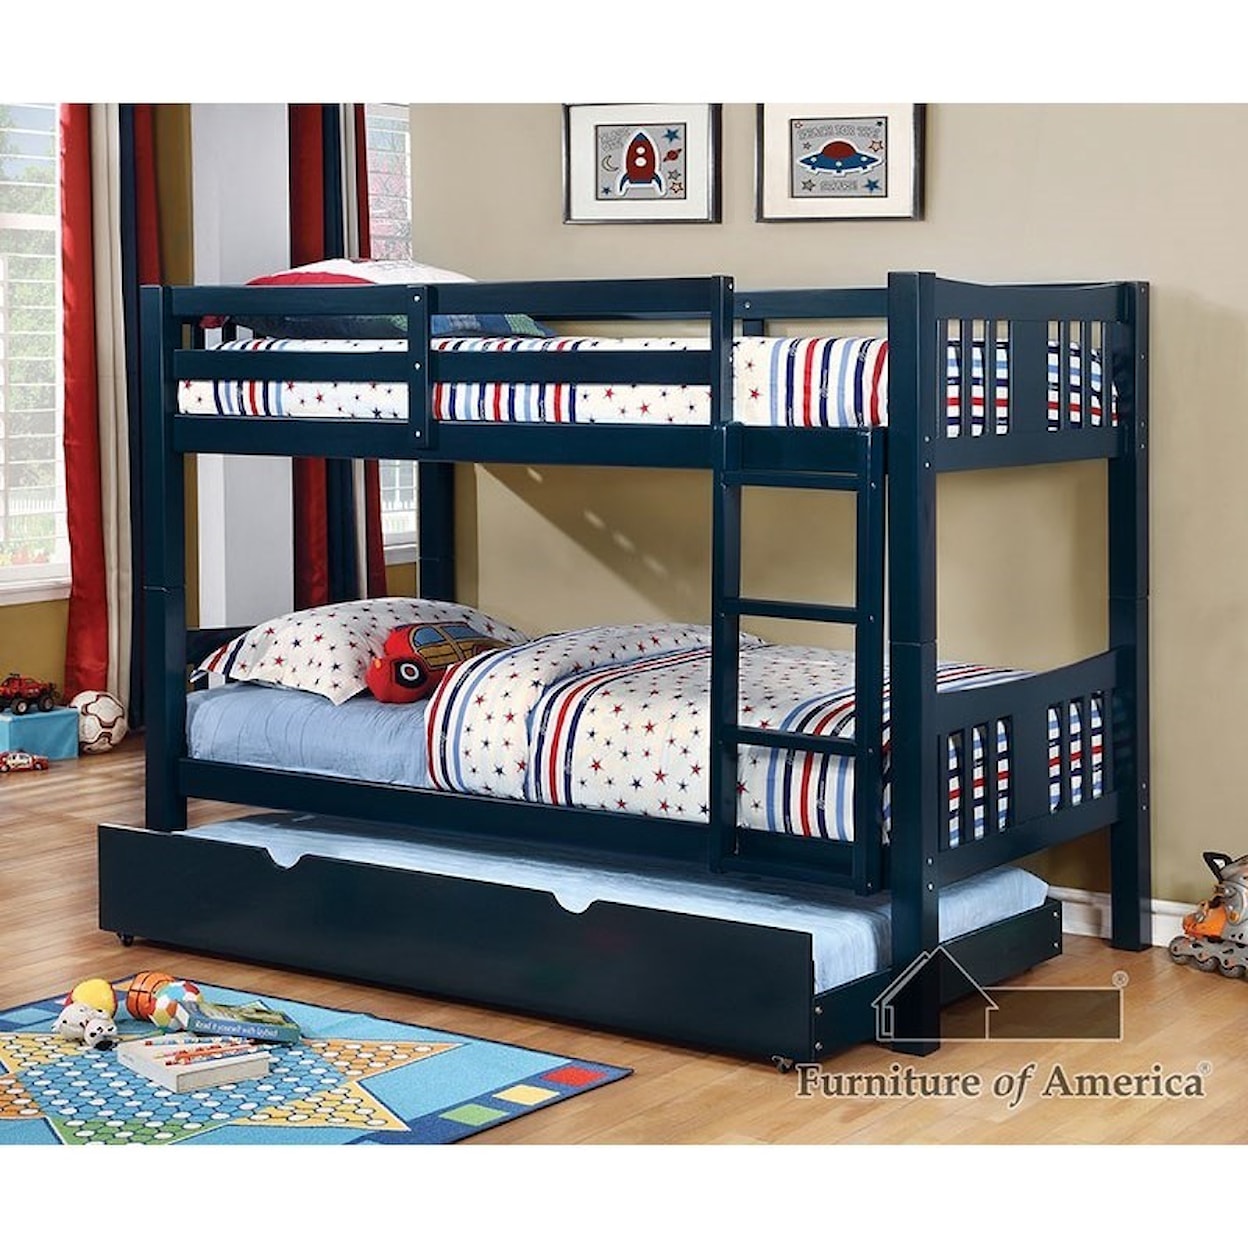 Furniture of America Cameron Twin over Twin Bunk Bed